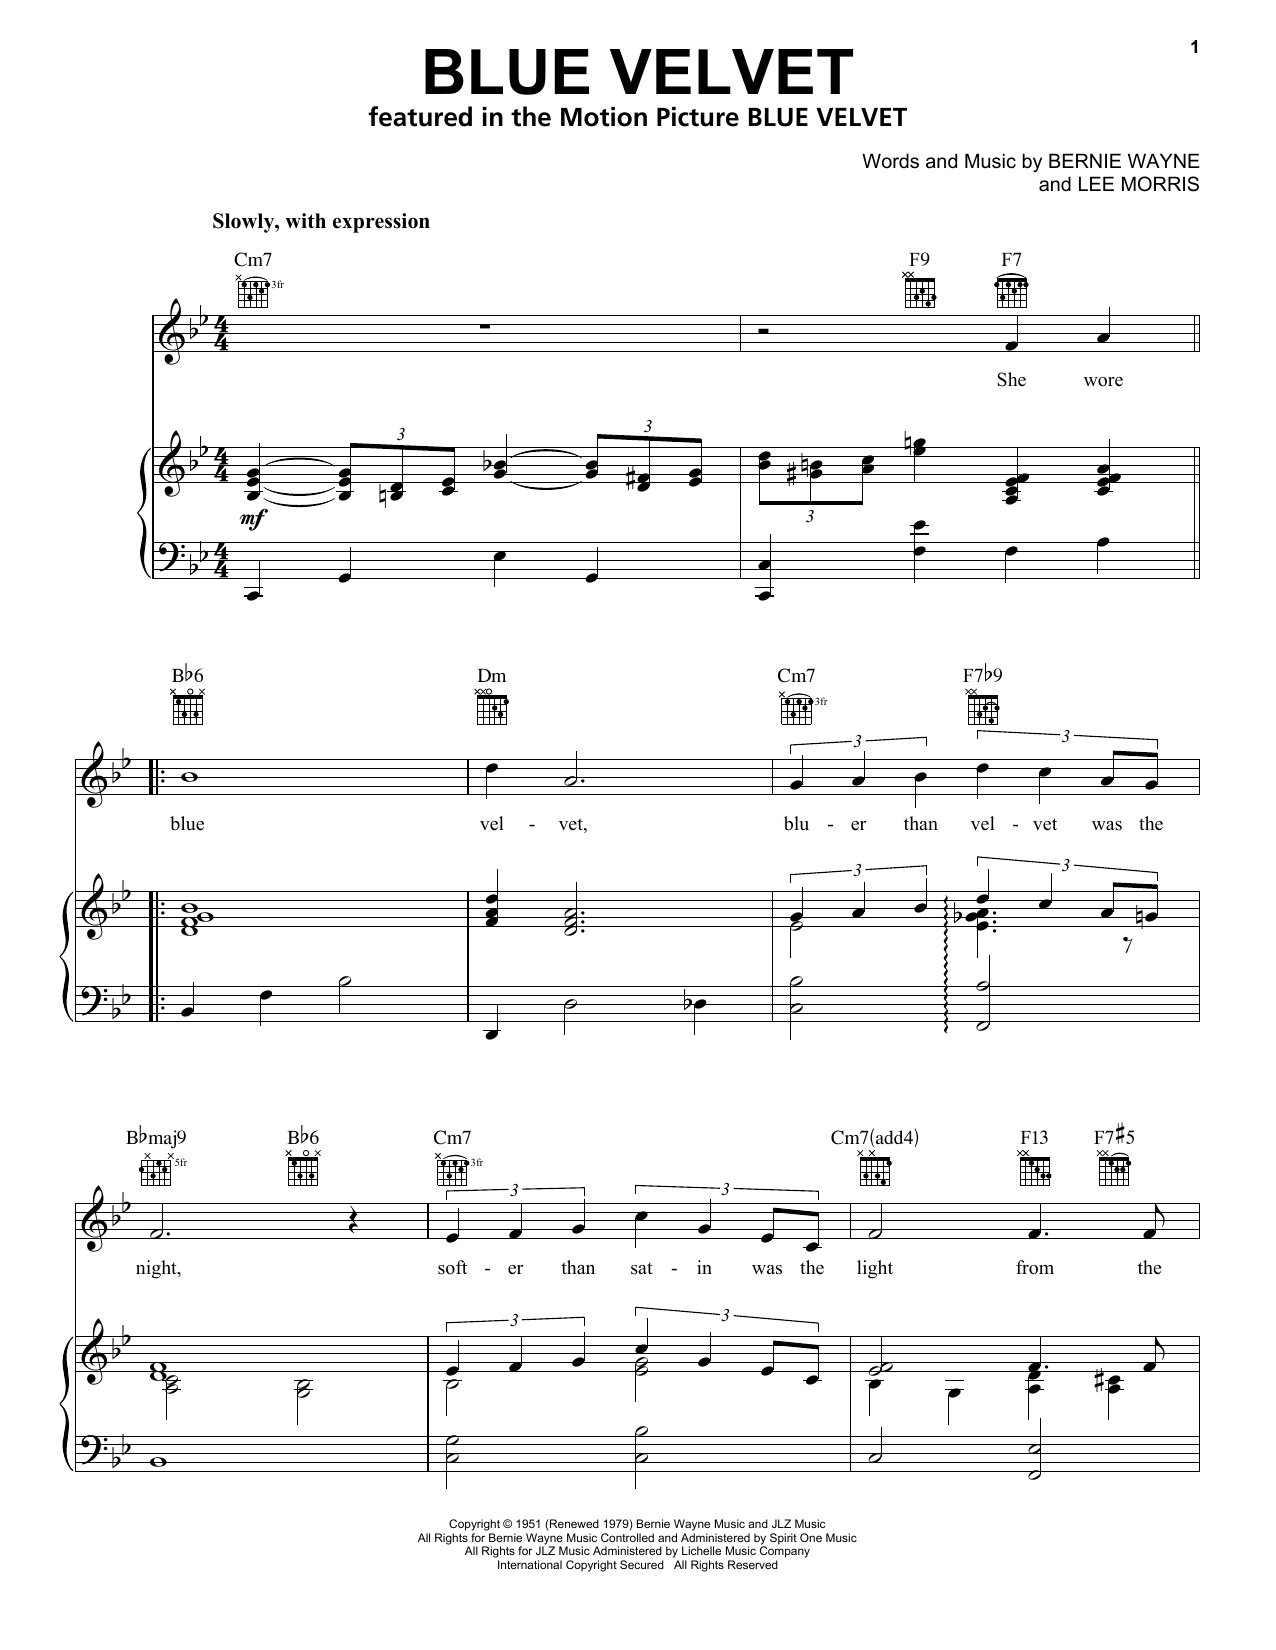 Bobby Vinton Blue Velvet Sheet Music Notes & Chords for Viola - Download or Print PDF